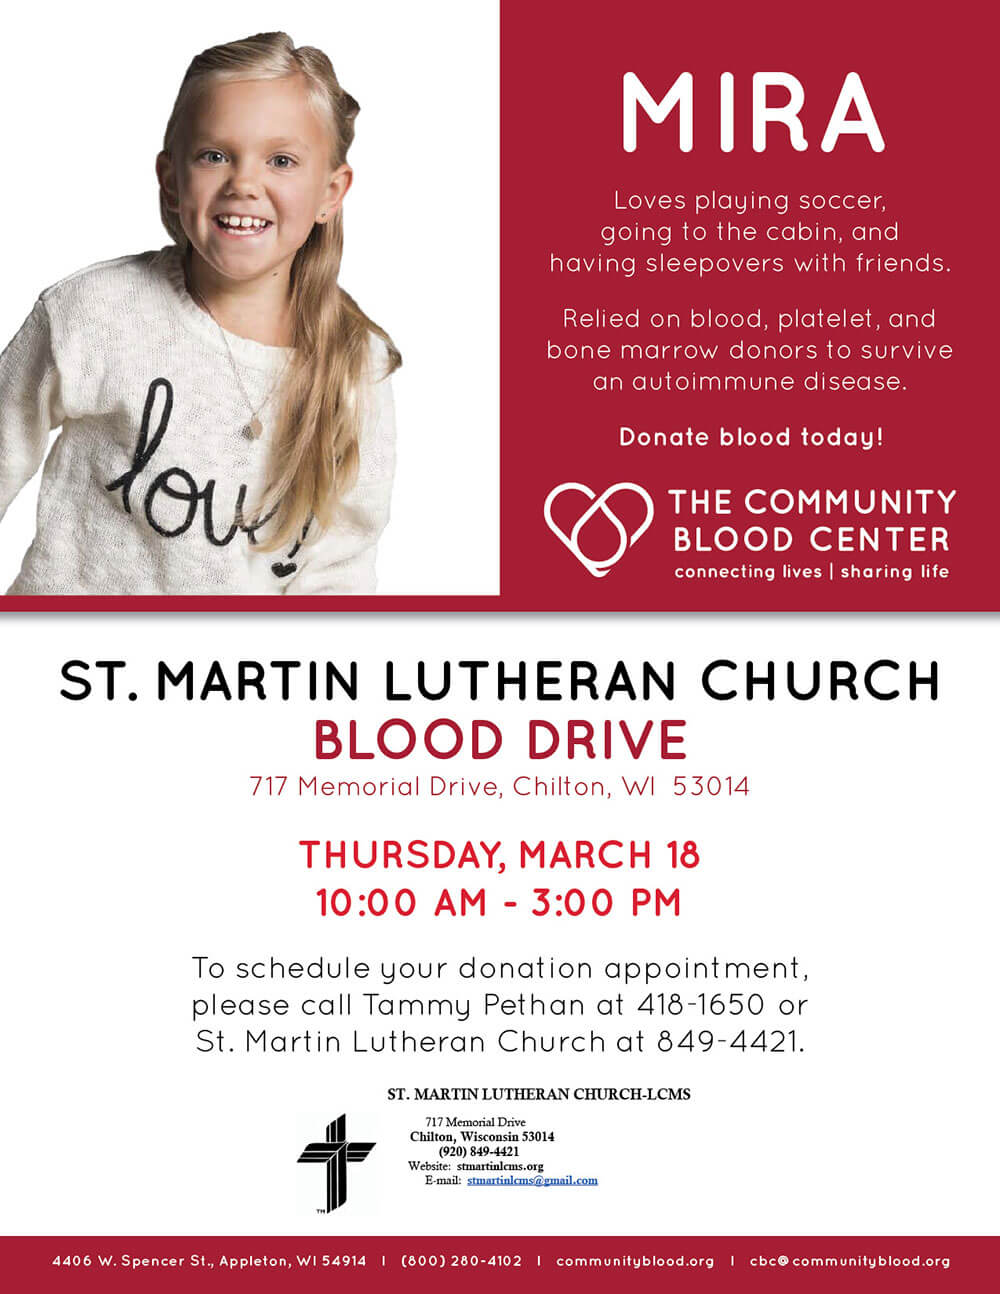 March 18, 2021 Blood Drive Community Blood Center St. Martin Lutheran Church, Chilton